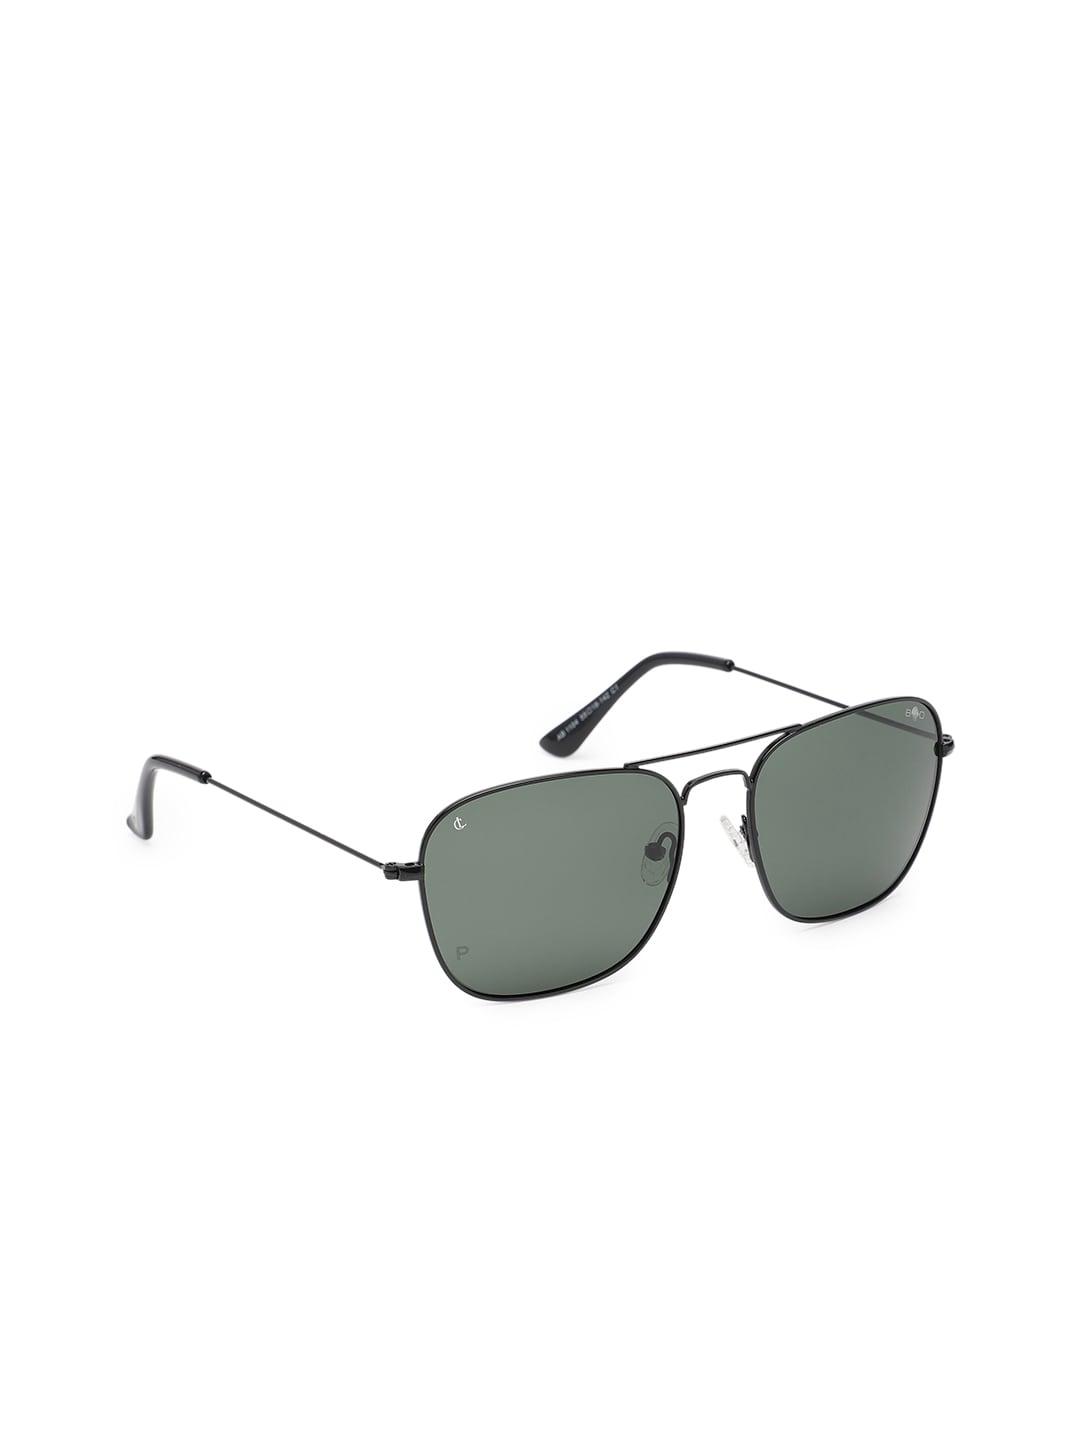 CHARLES LONDON Unisex Green Lens & Black Square Sunglasses AB 1104 C1 55 S